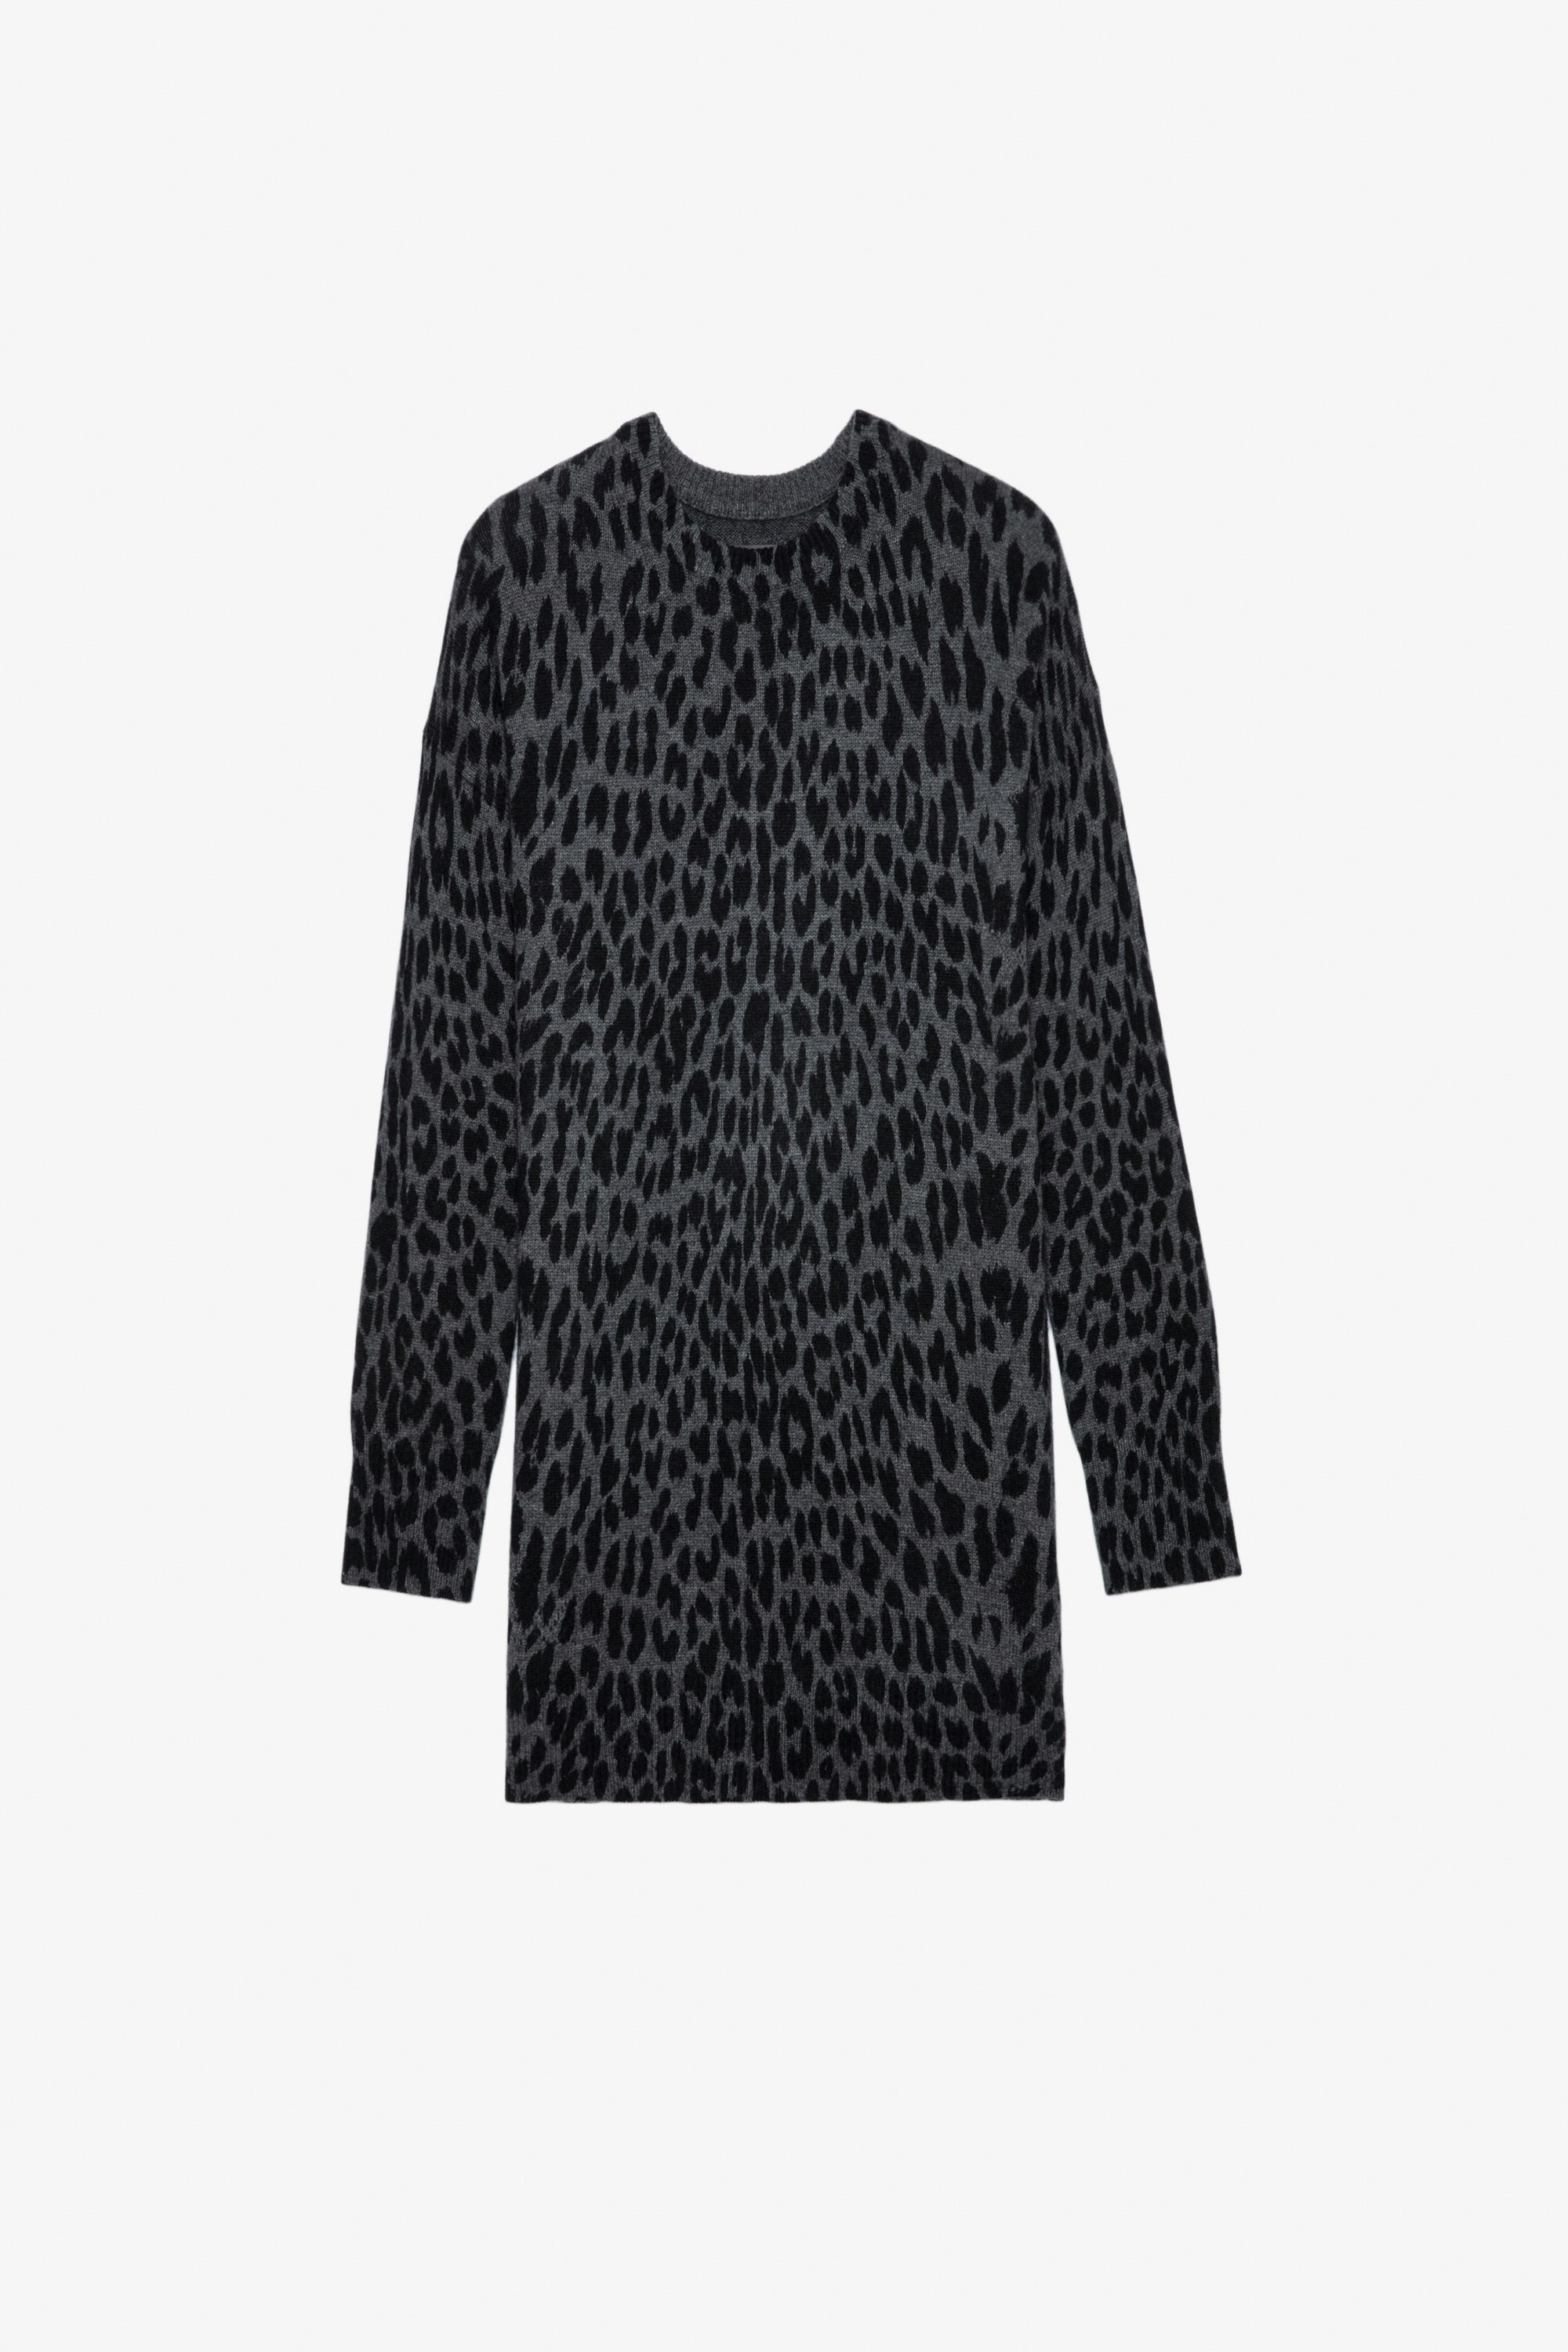 Malia Leopard Cashmere Dress - Women’s short grey leopard-print cashmere dress.